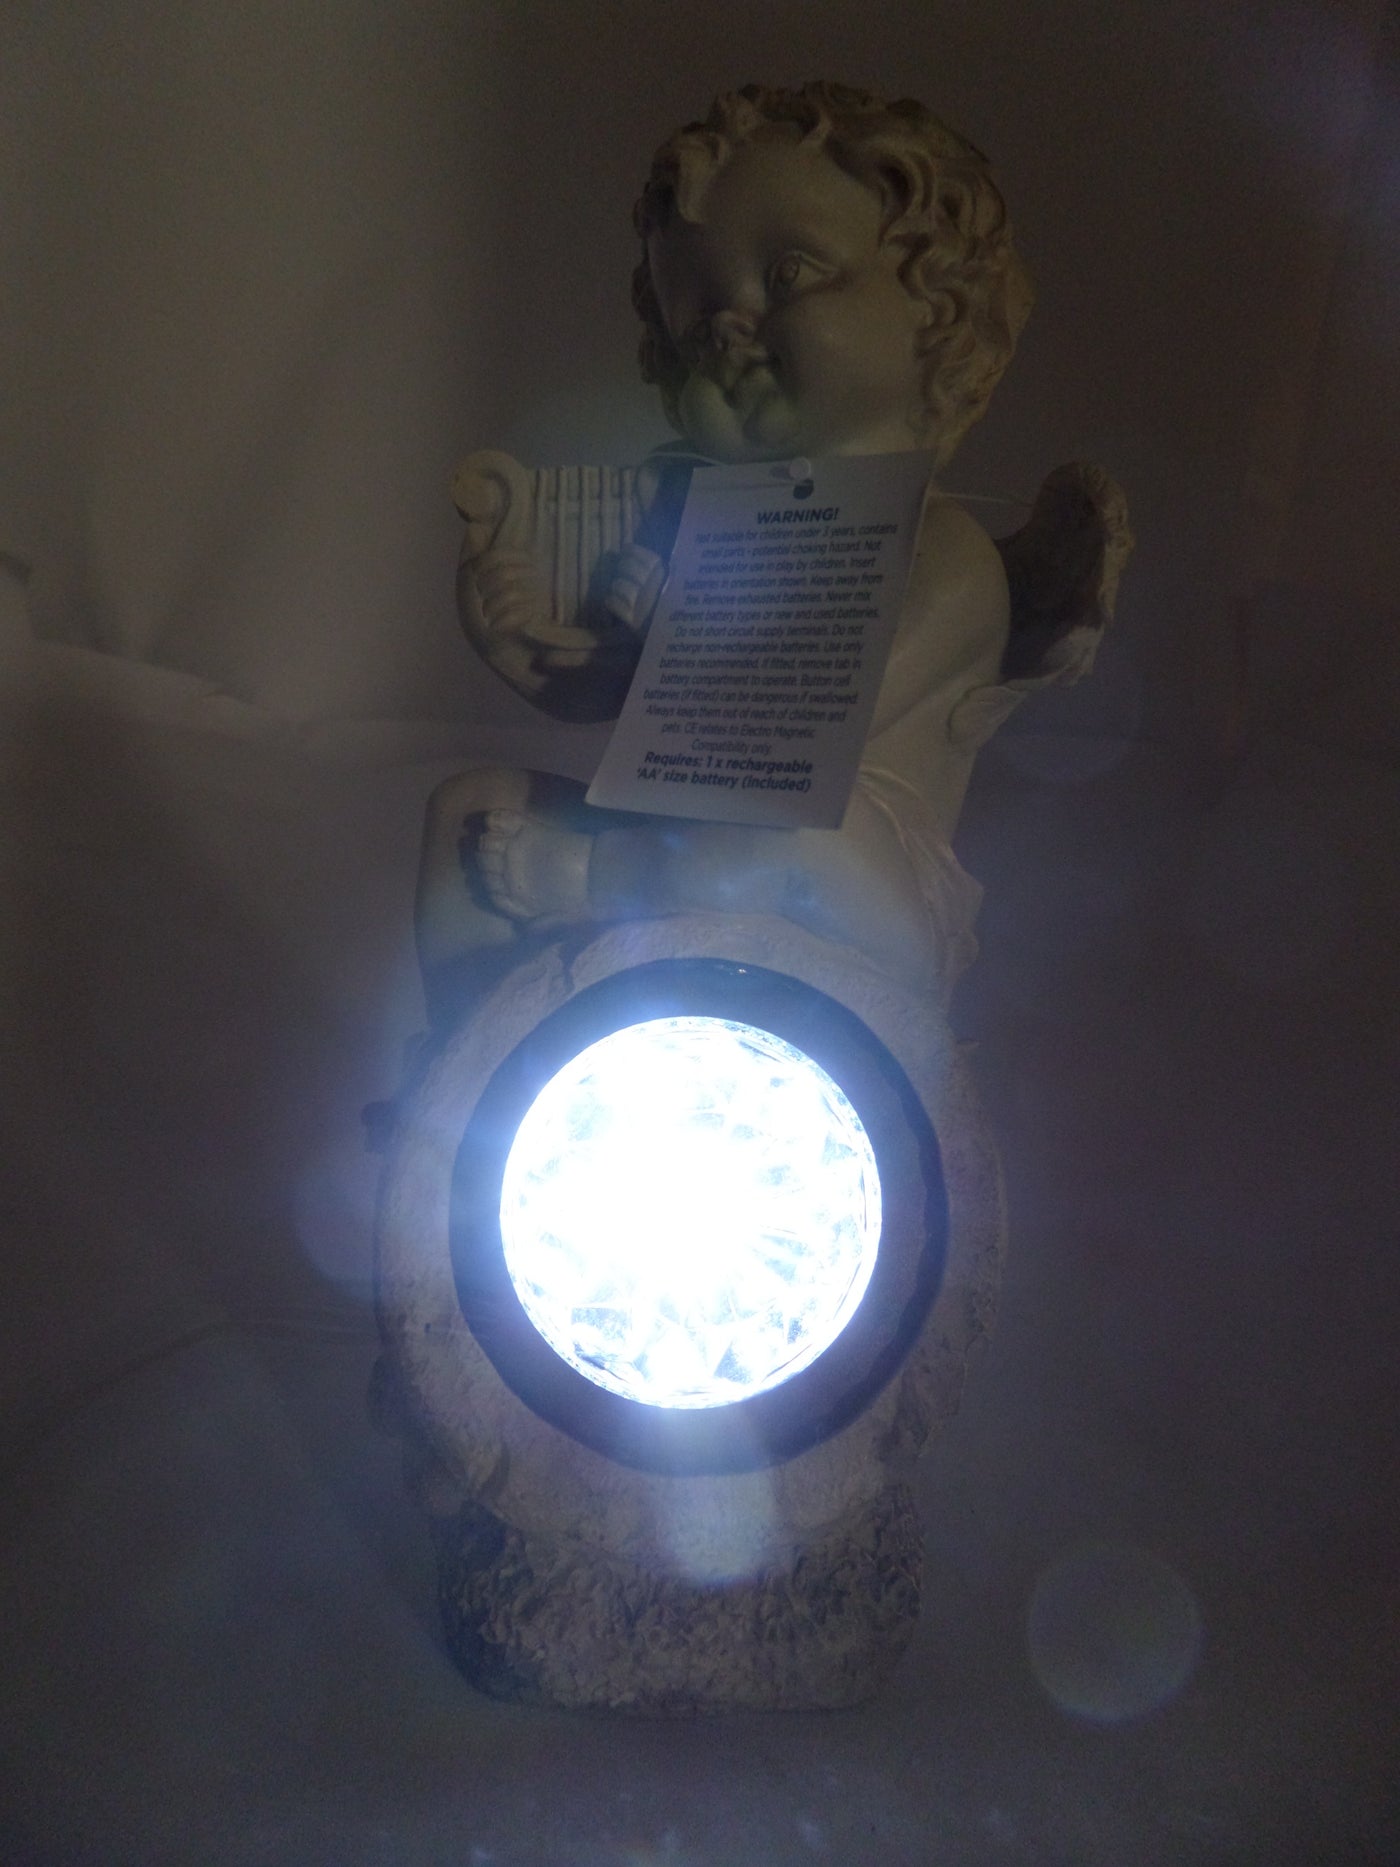 PR26255_BS122163_Premier cherub with solar white light - Image7